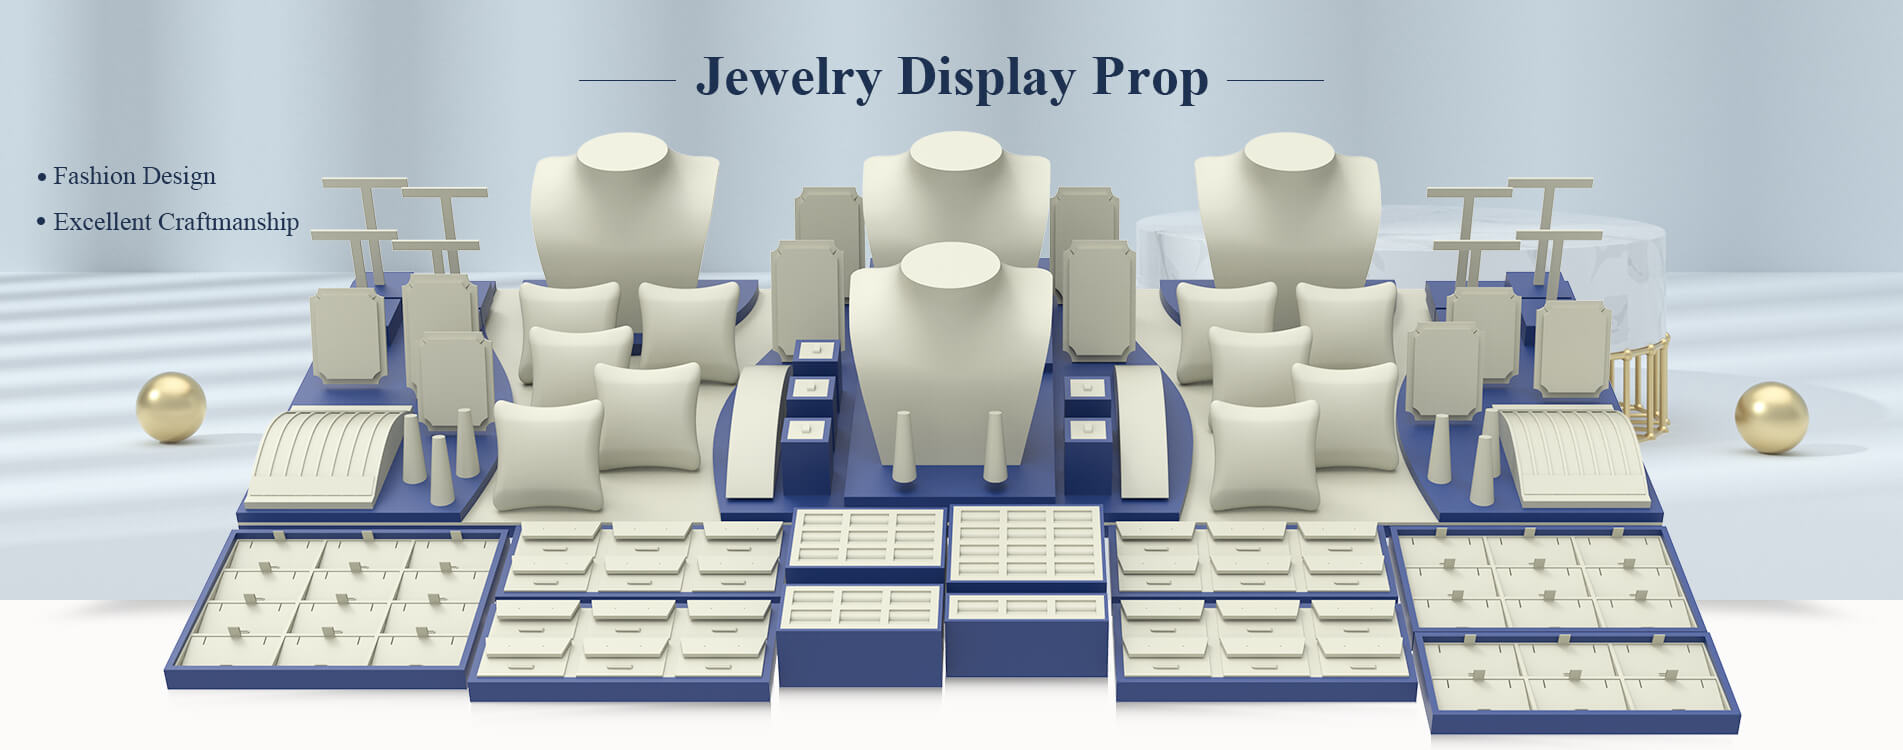 Jewelry Display Prop